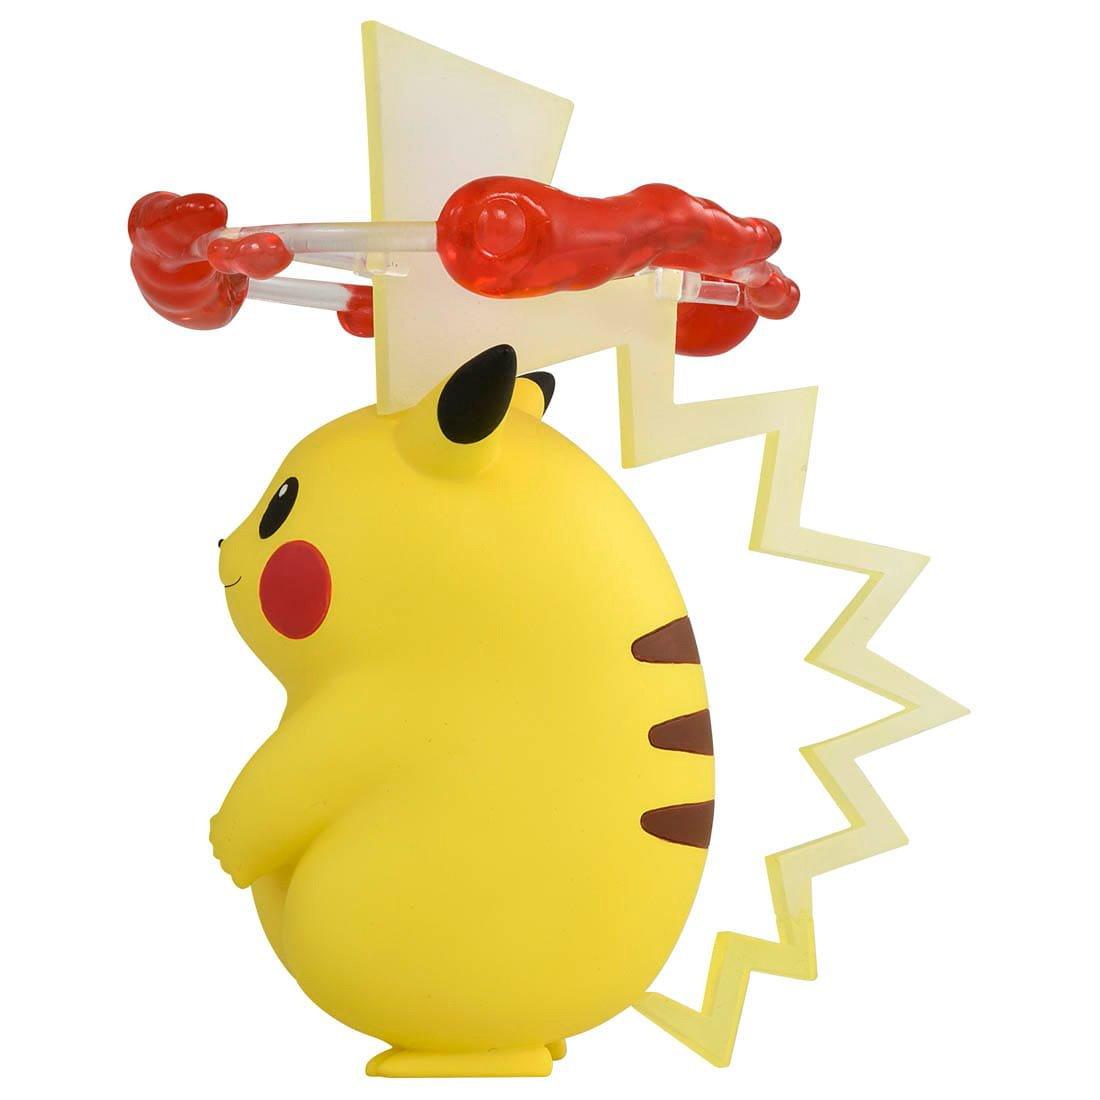 Takara Tomy  Static Figure - Moncollé - Pokemon - Pikachu 